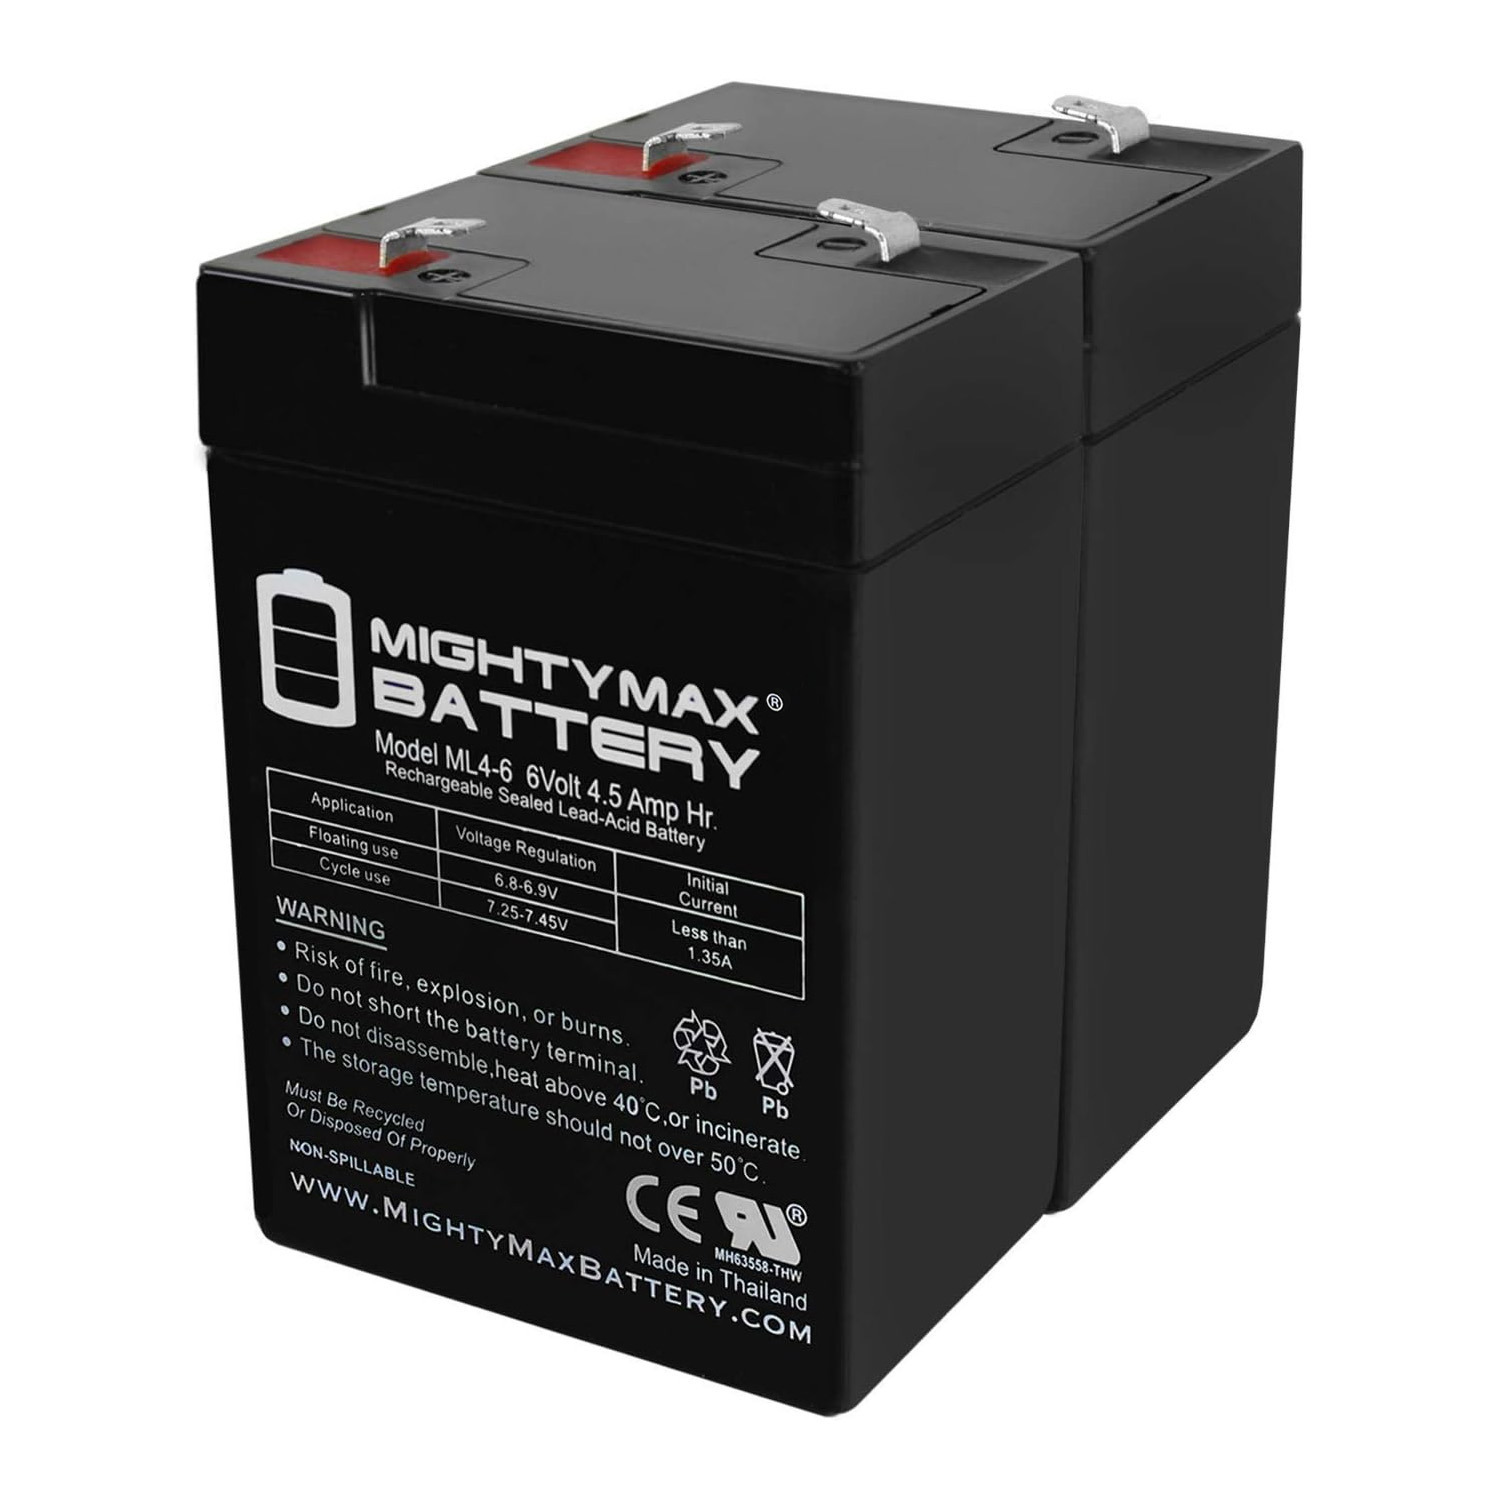 6V 4.5AH SLA Replacement Battery for Emergi-Lite 6M4 - 2 Pack